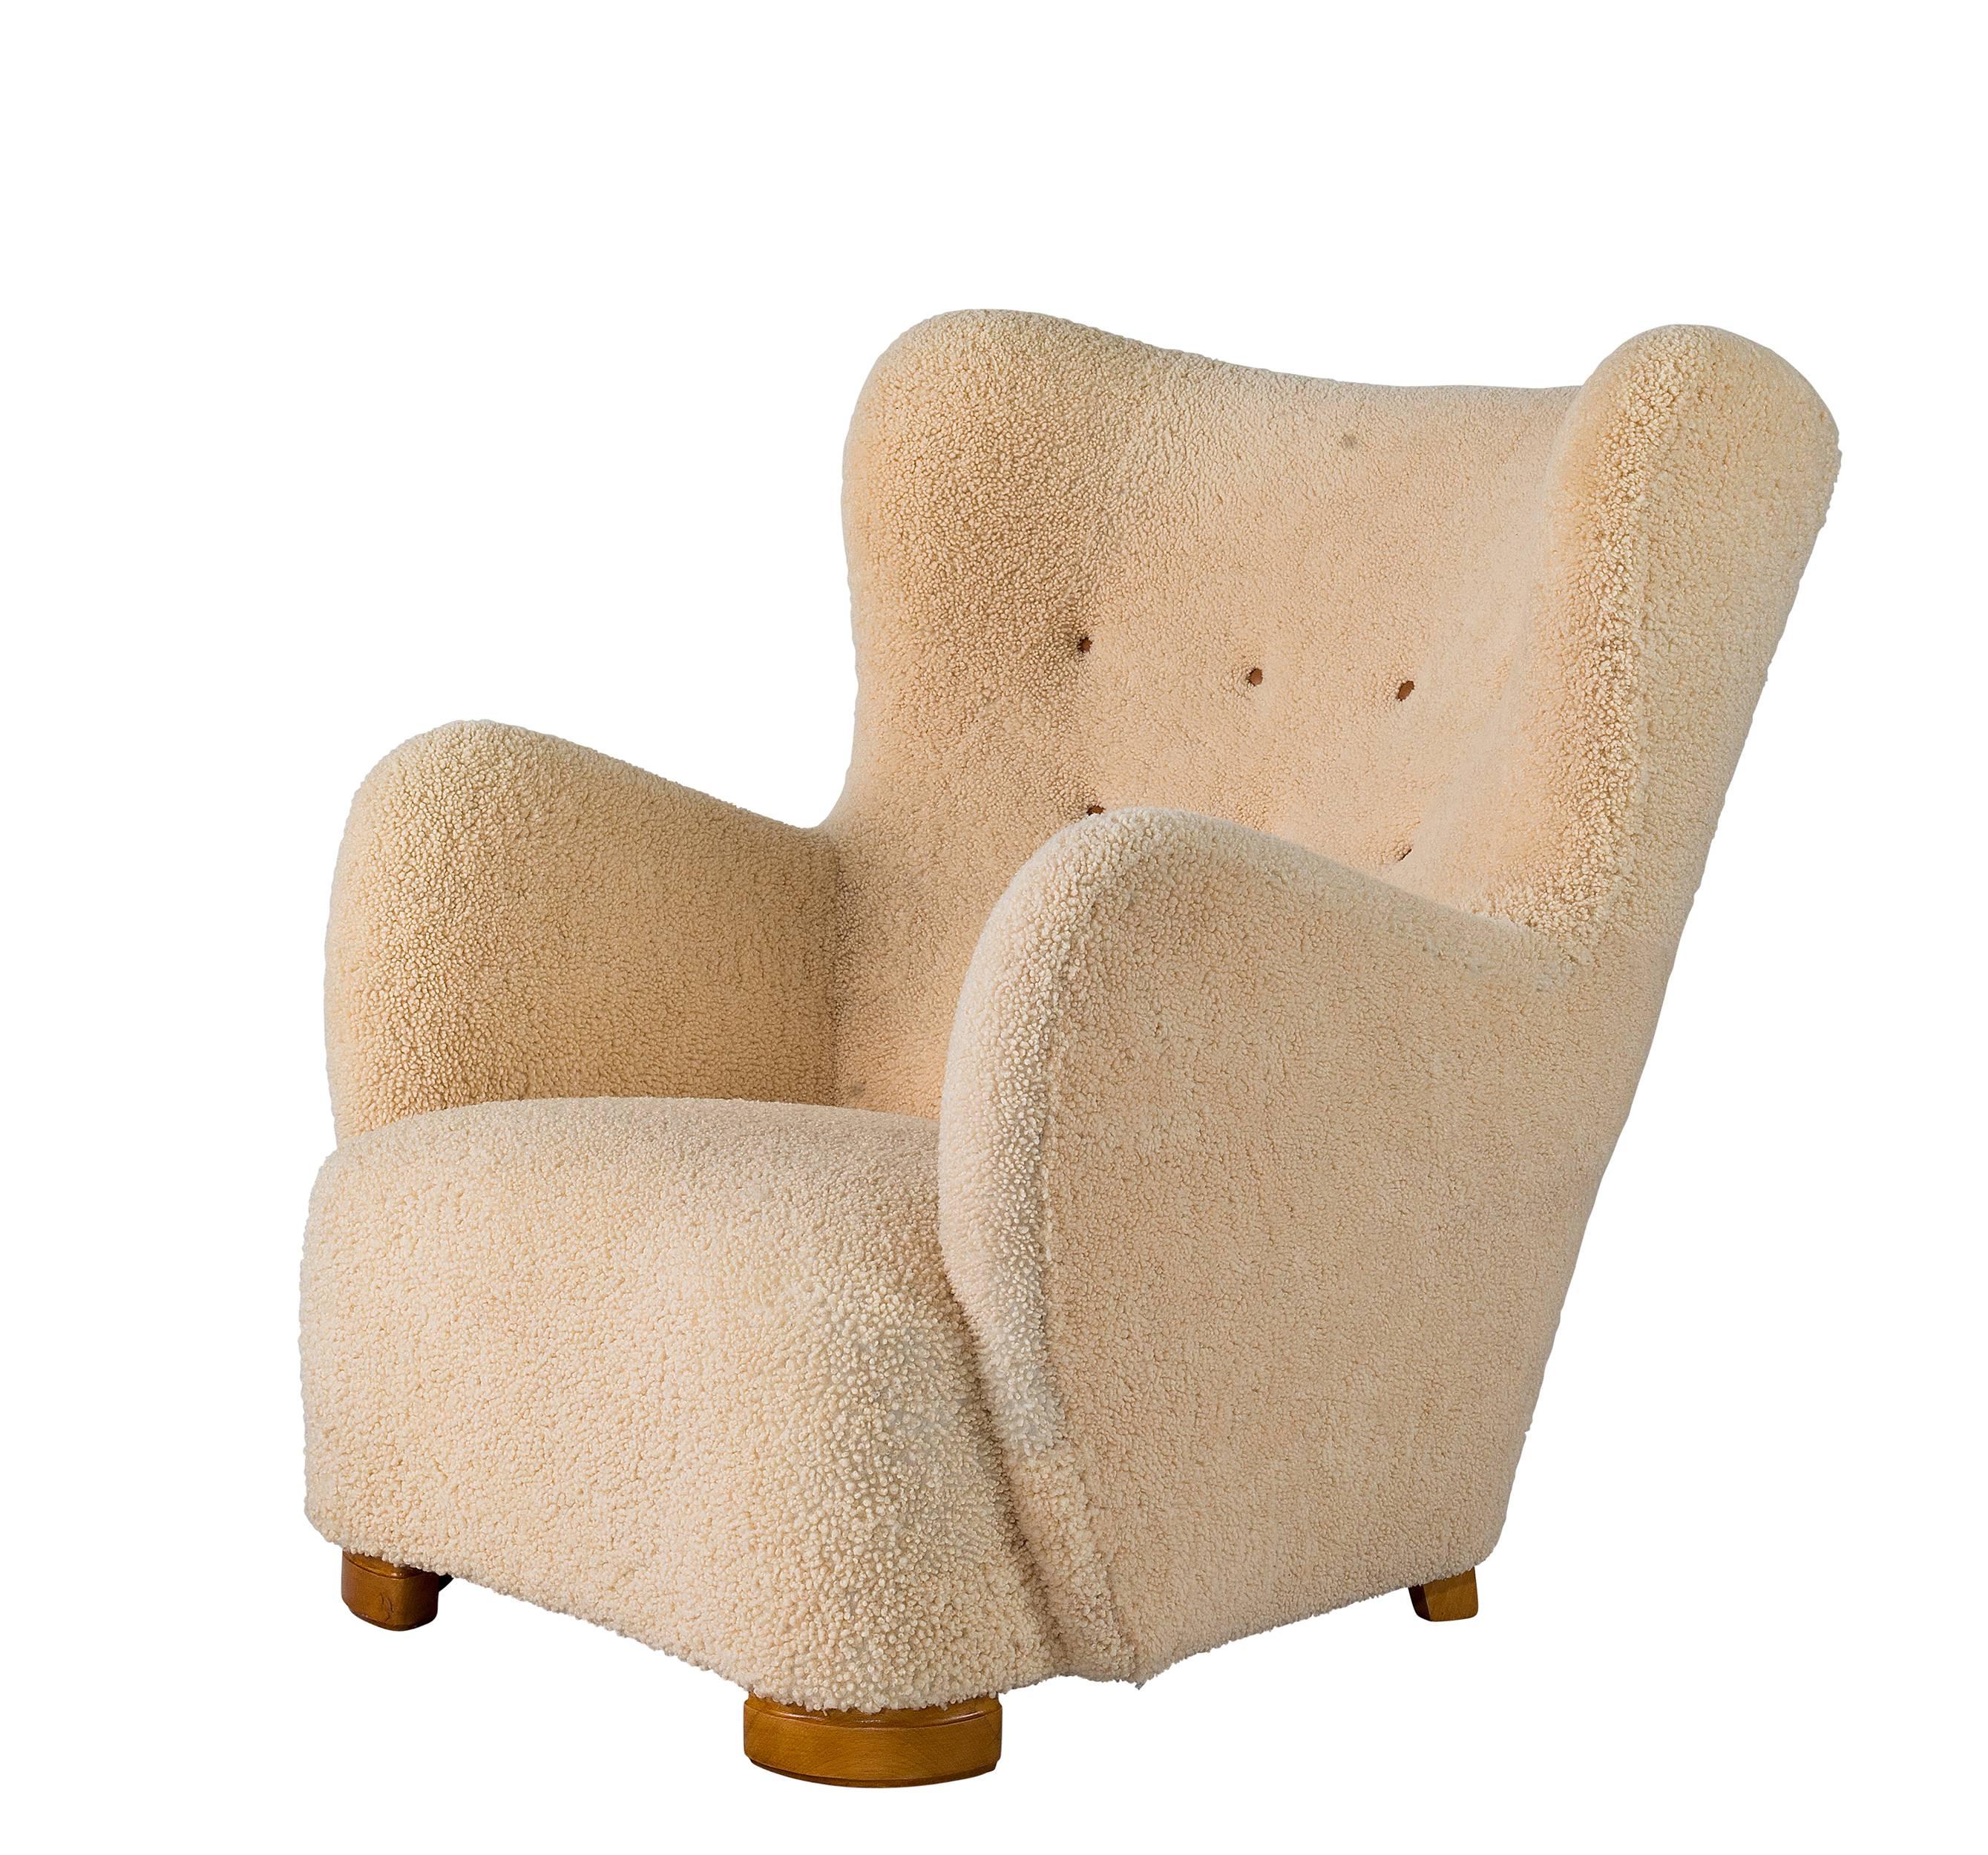 Mid-20th Century Scandinavian Sheepskin Lounge Chair